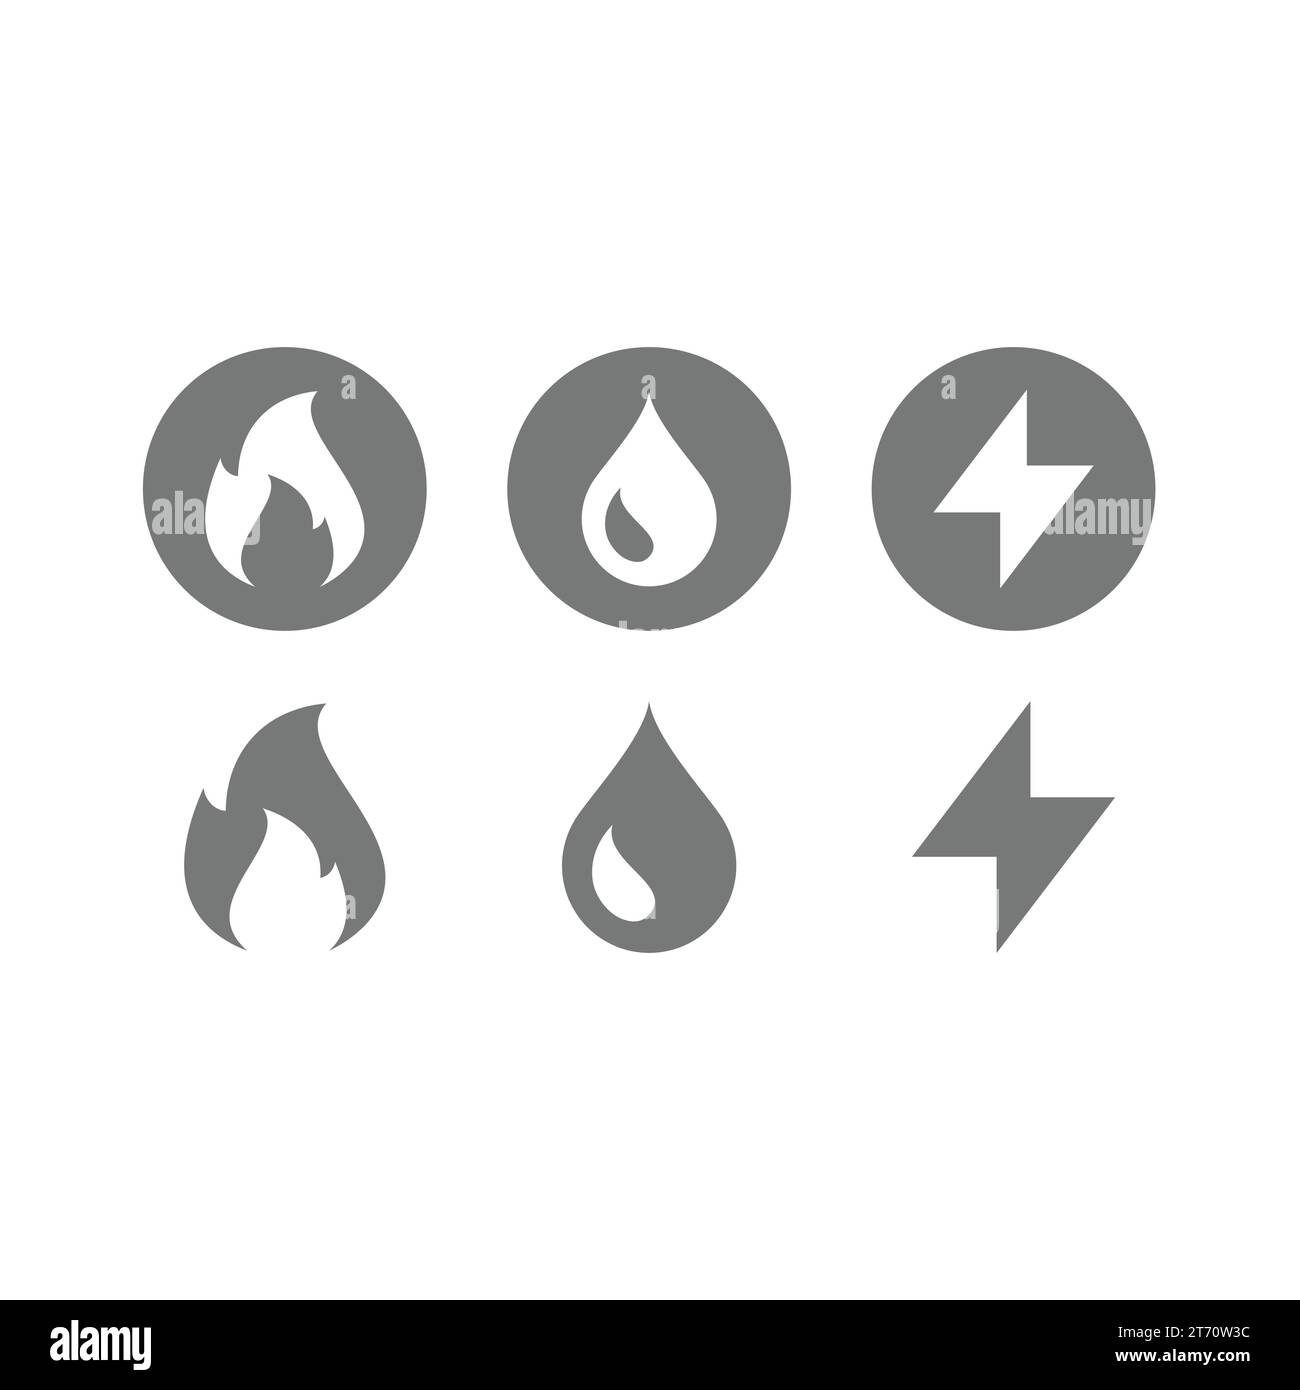 Gas, water and electricity utilities vector icon set. Public utility service symbols. Stock Vector